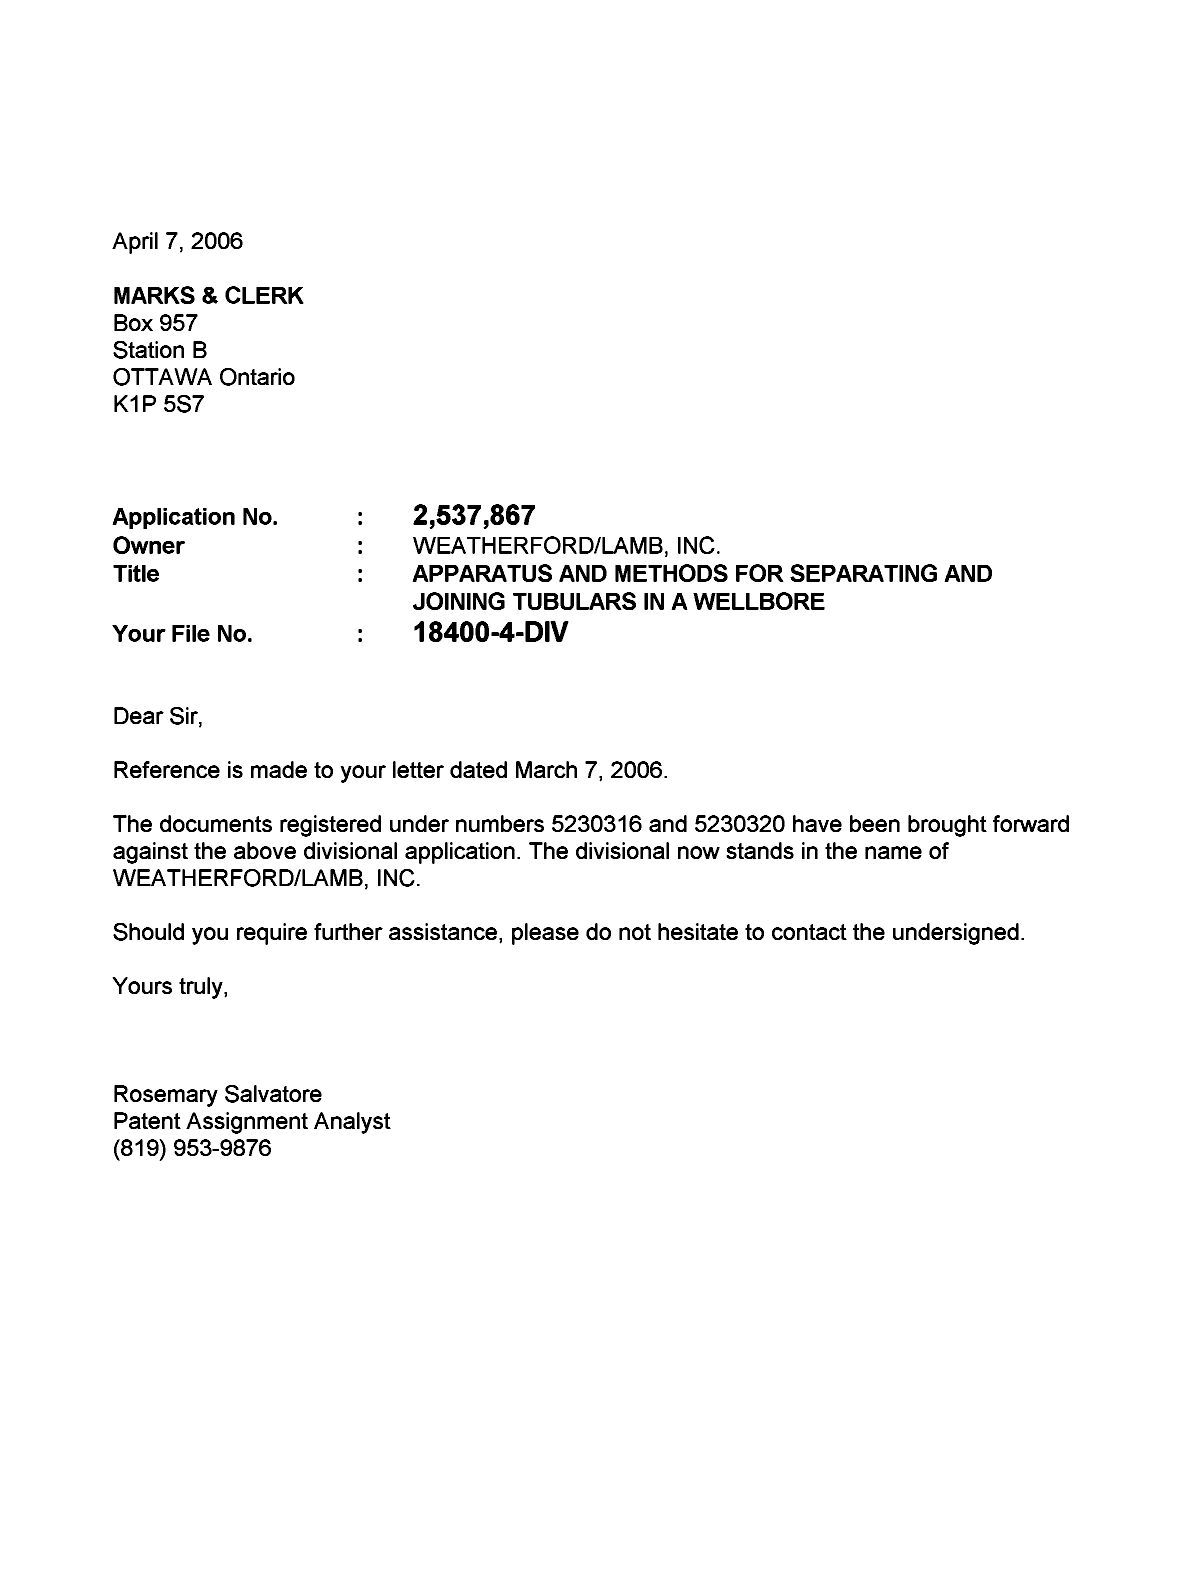 Canadian Patent Document 2537867. Correspondence 20060407. Image 1 of 1